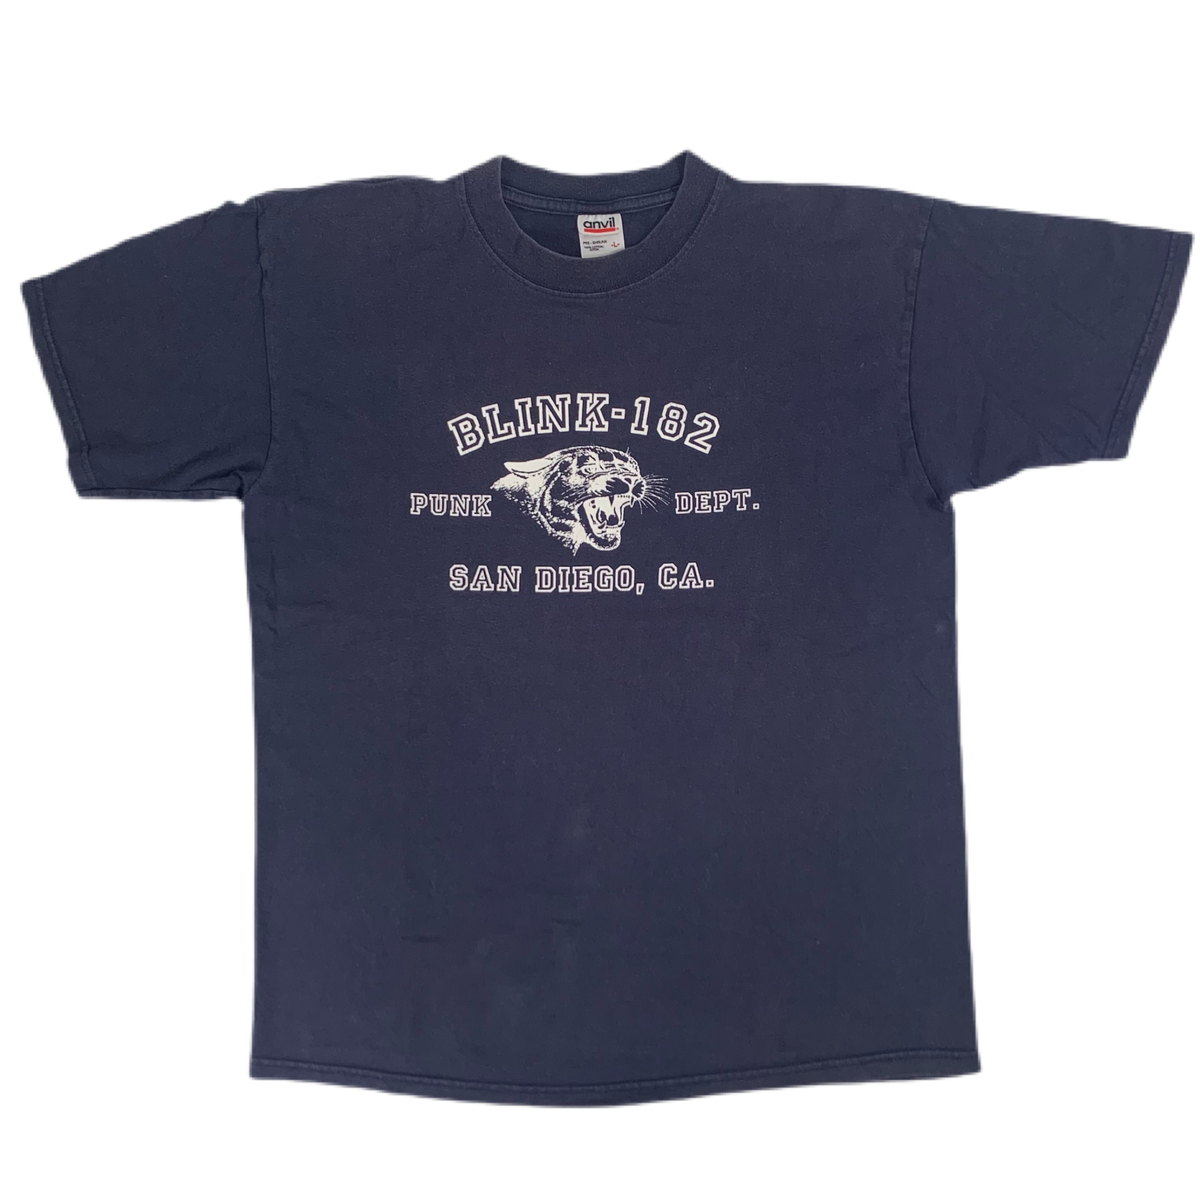 Vintage Blink-182 “San Diego” T-Shirt